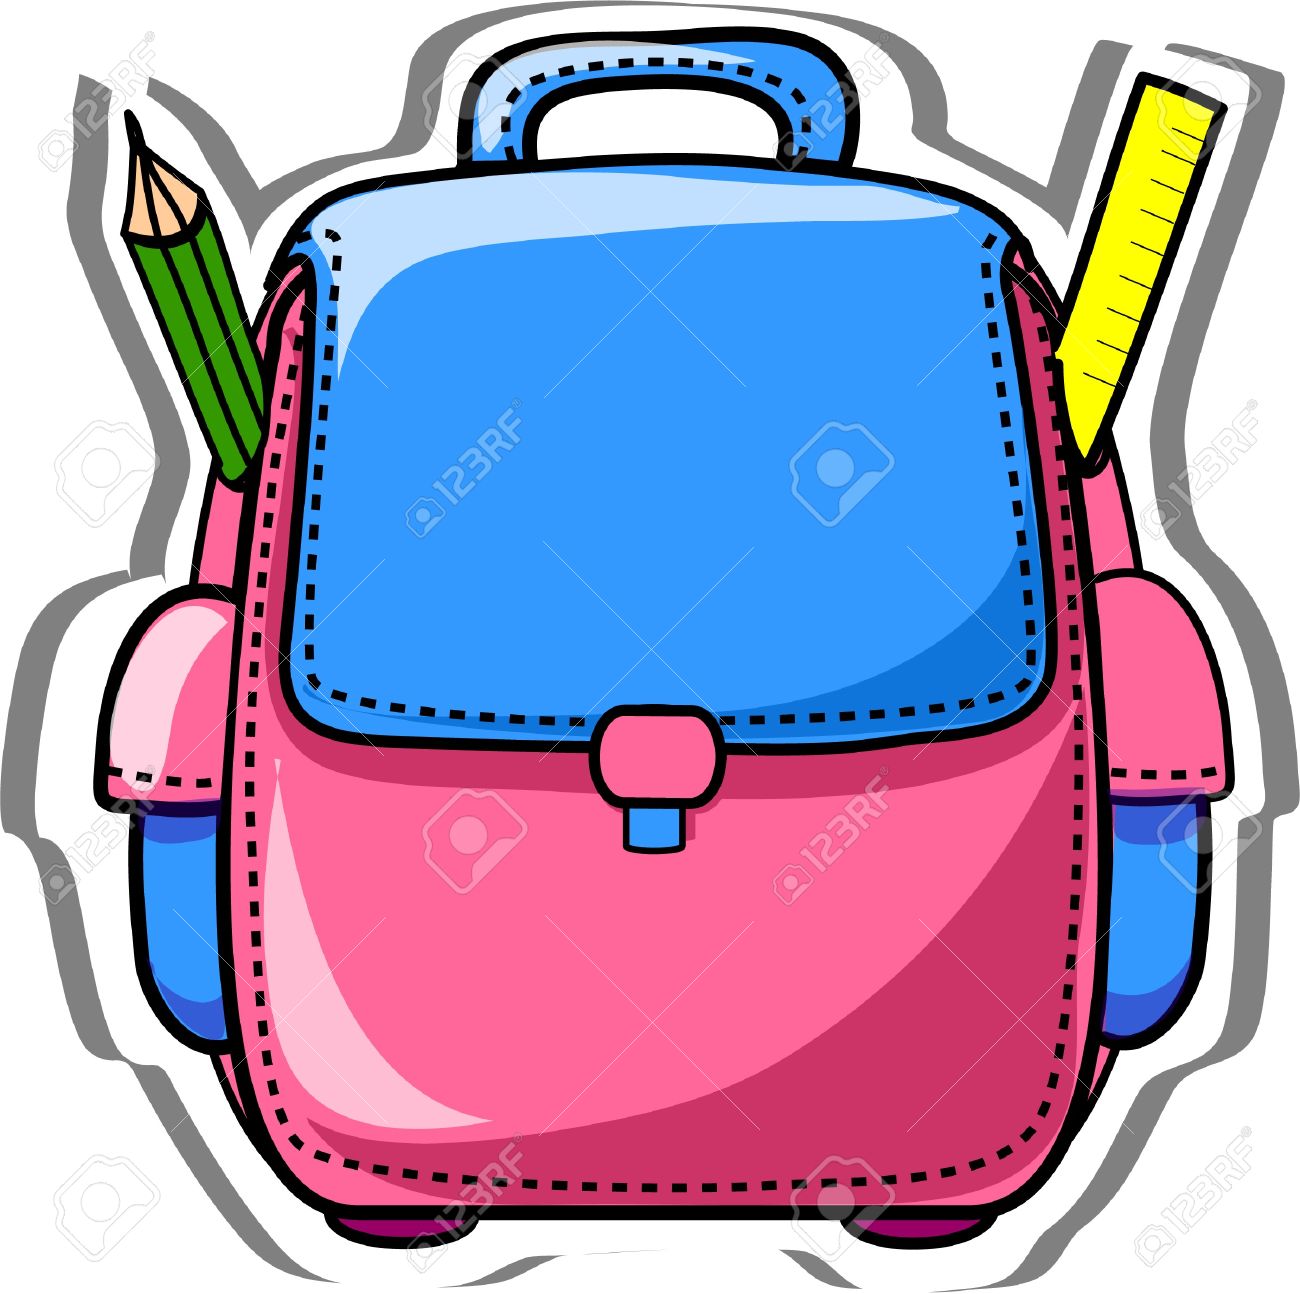 School bag